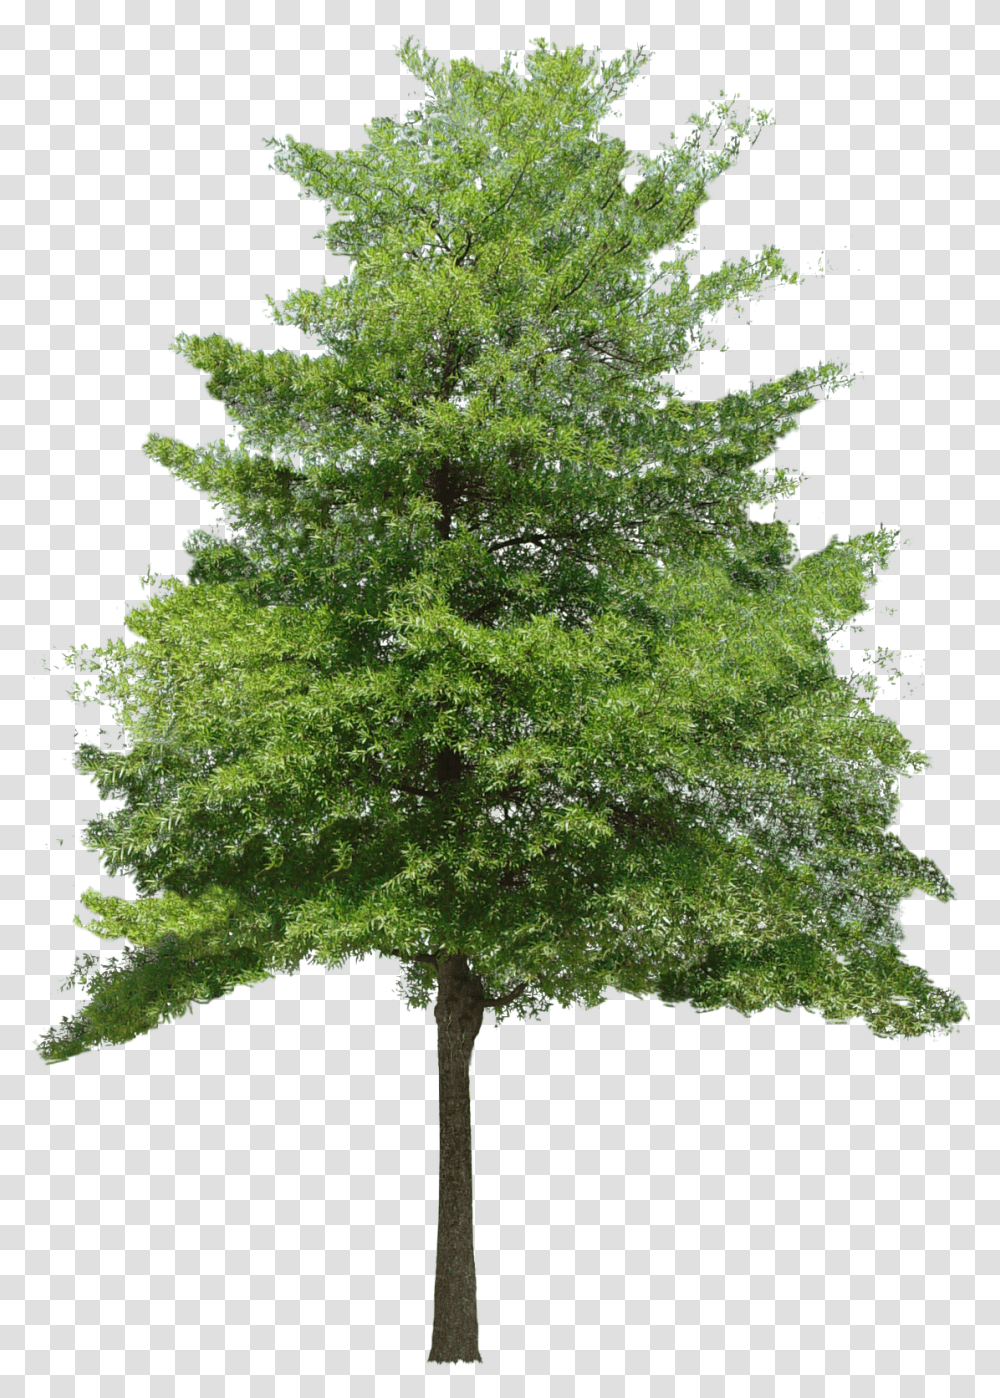 Tree Hd Hdpng Images Pluspng Tree Texture Background, Plant, Maple, Conifer, Oak Transparent Png